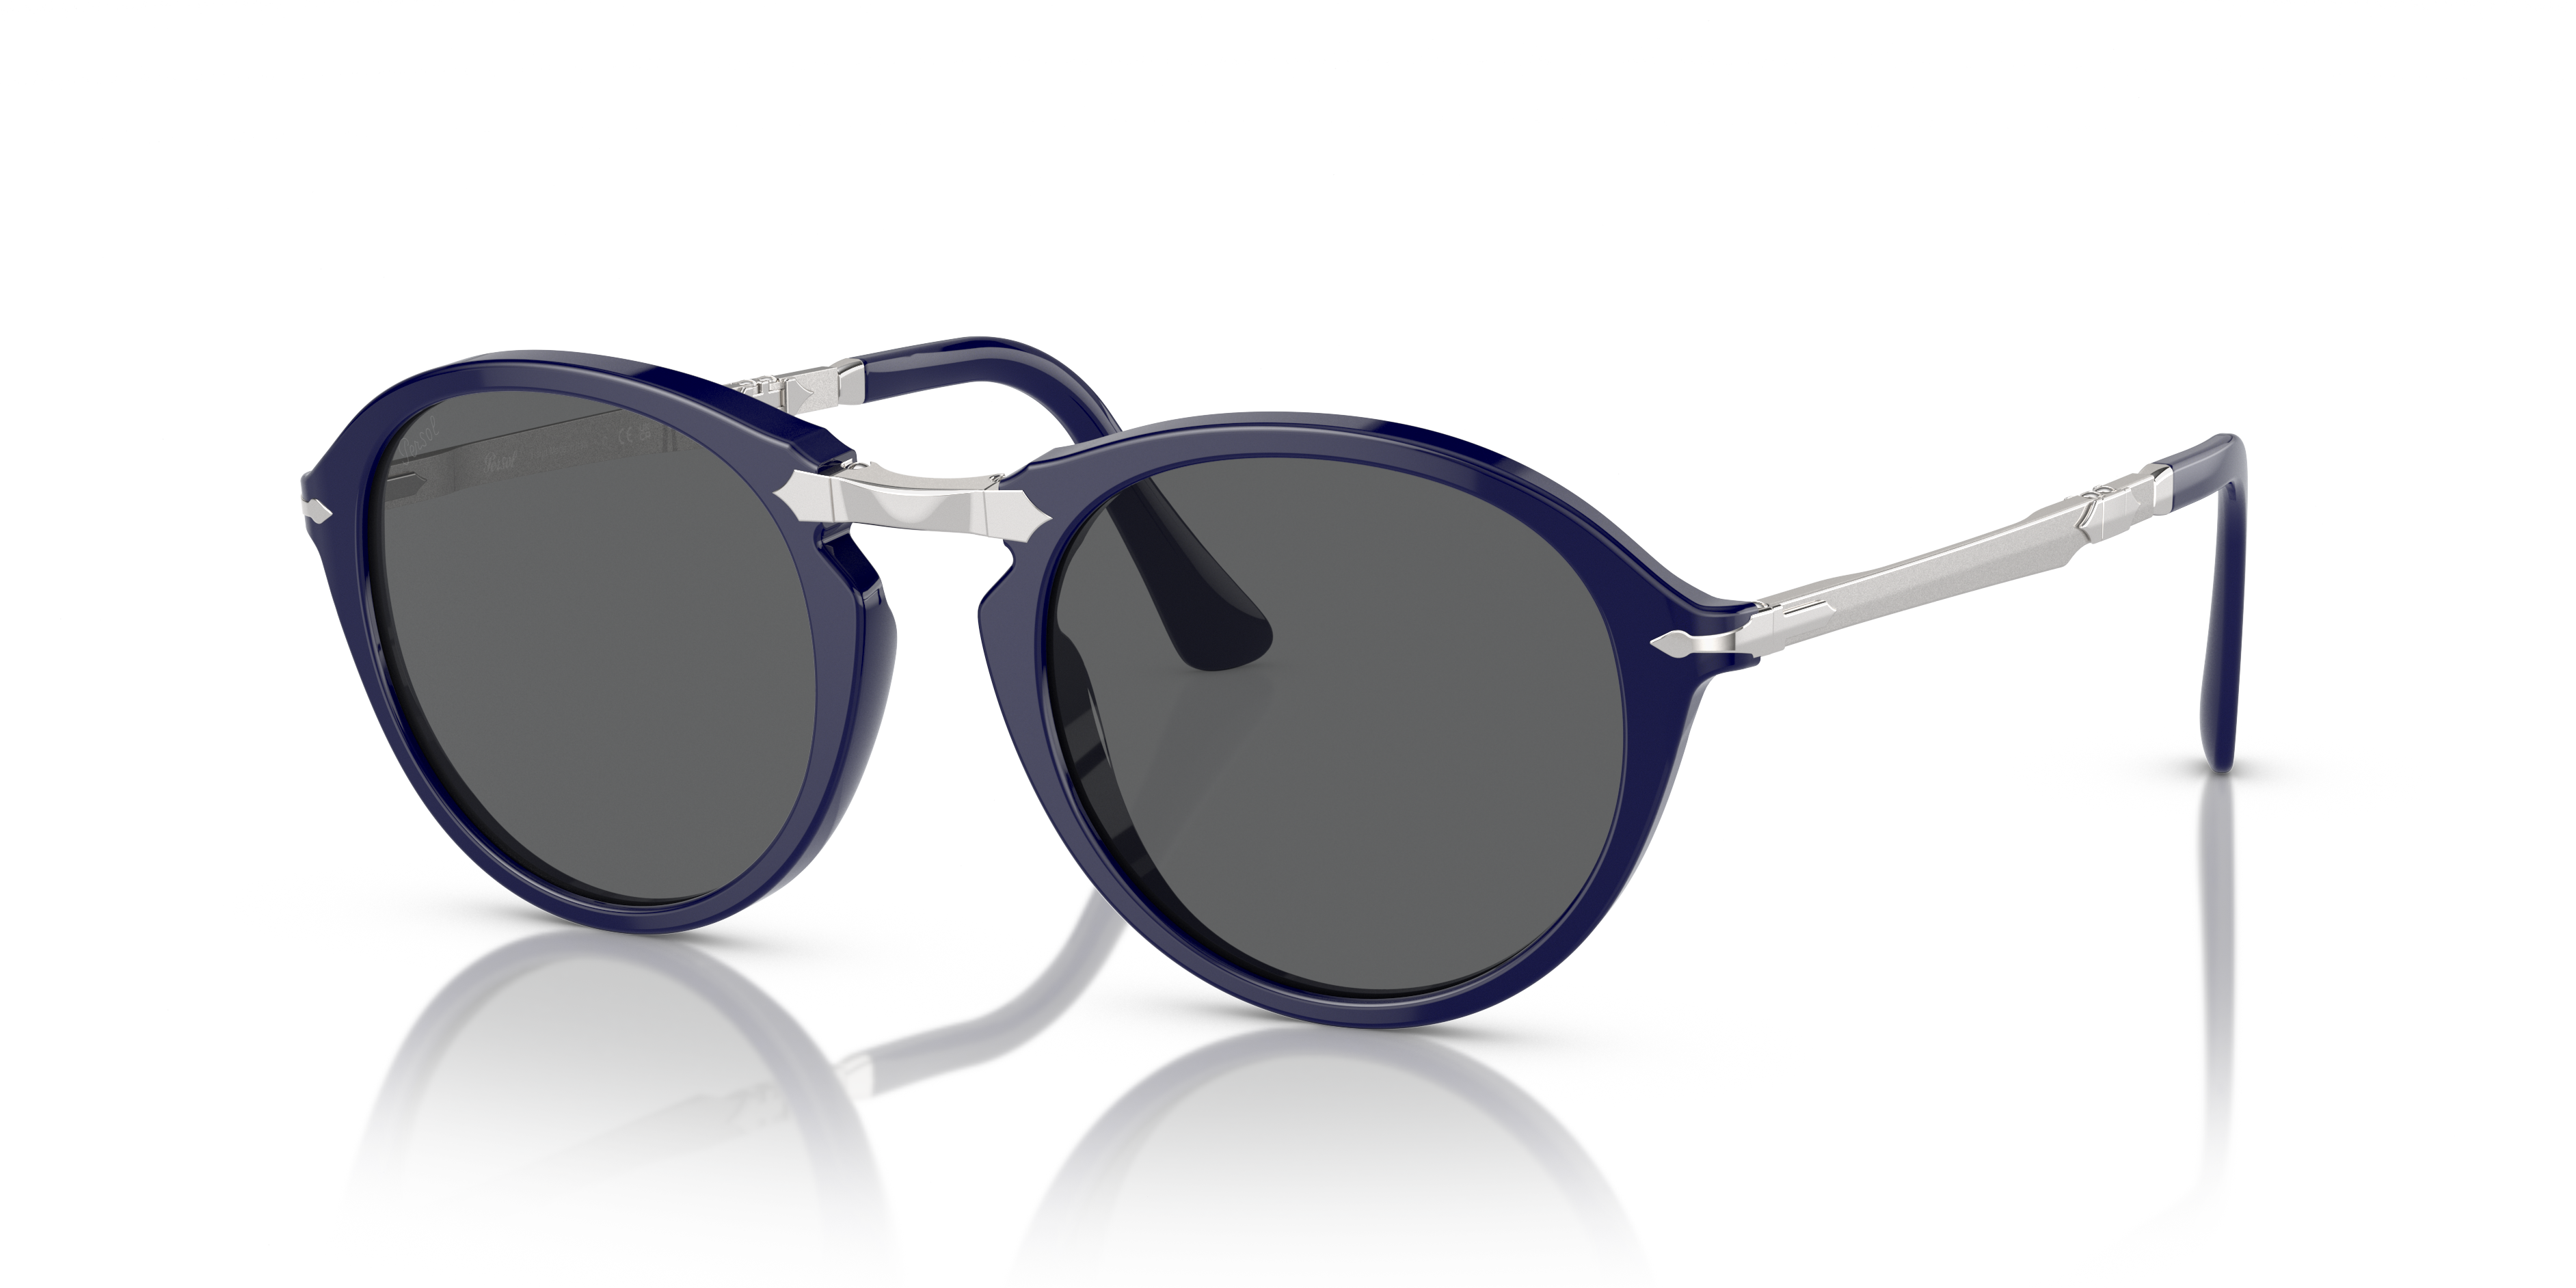 ONOS Harbor Docks Polarized Sunglasses 2.00 Add Power)%ｶﾝﾏ% Tortoise%ｶﾝﾏ% Amber by Onos Trading Company